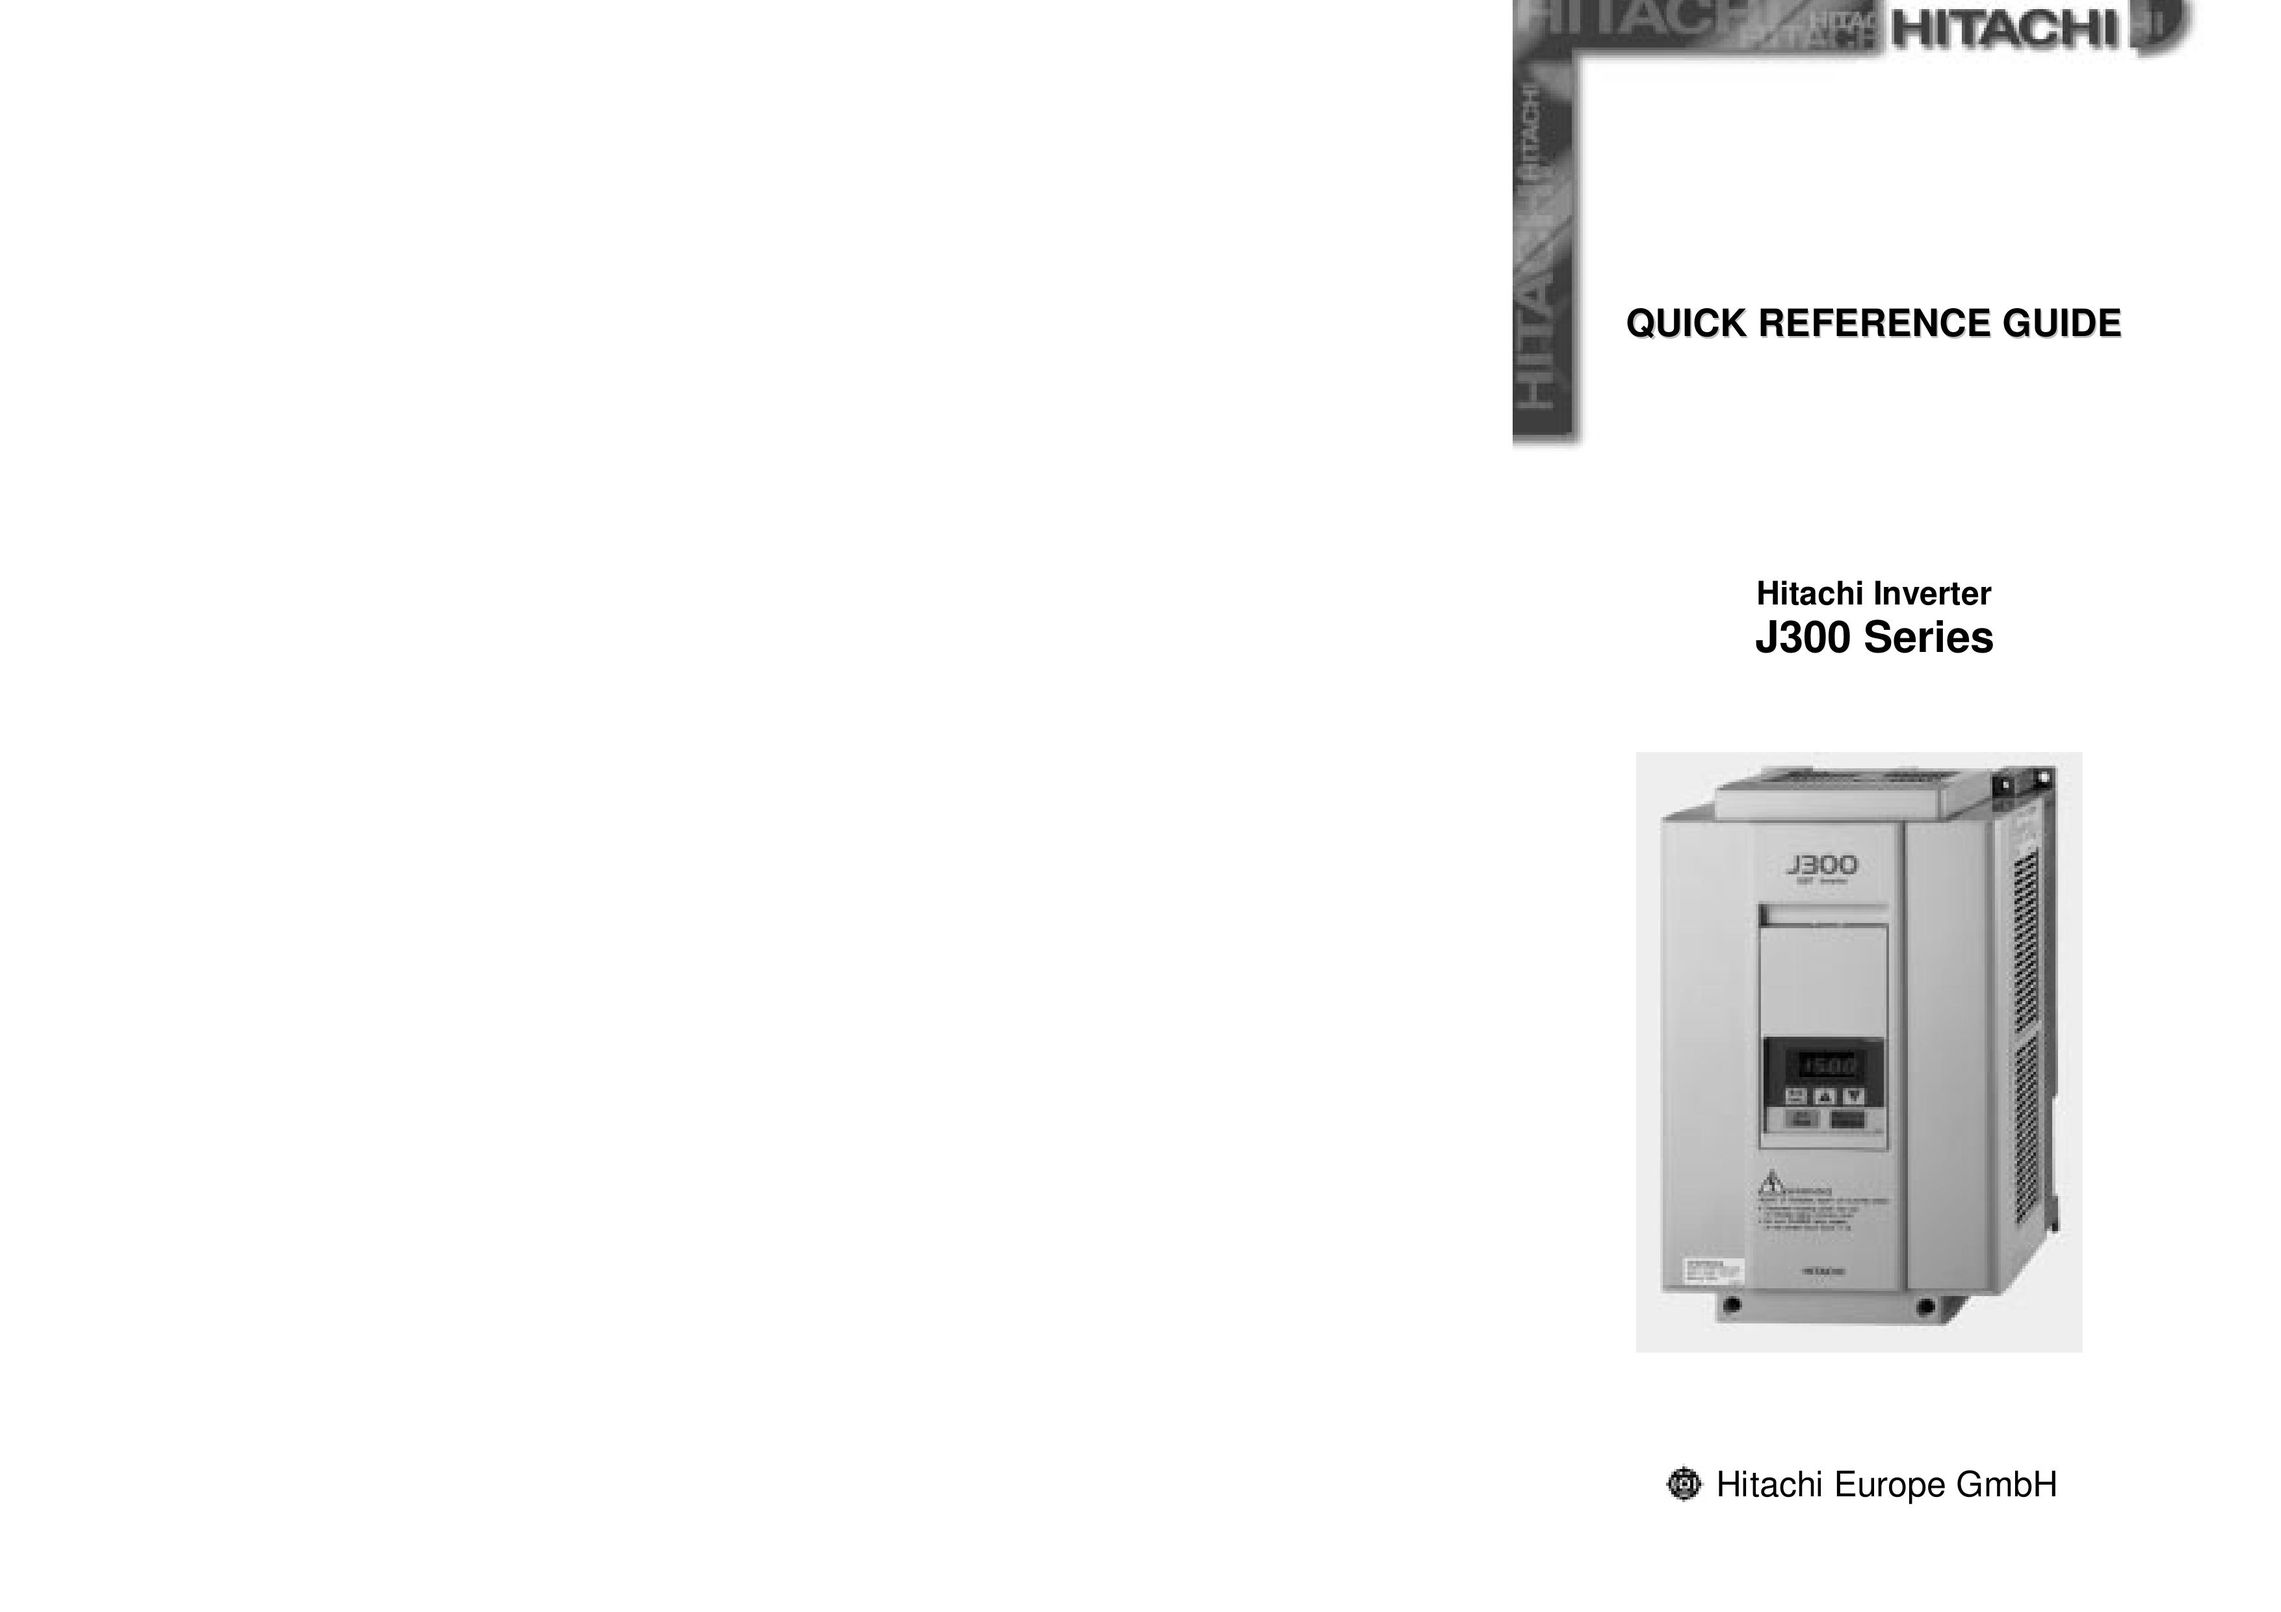 Hitachi J300 All in One Printer User Manual